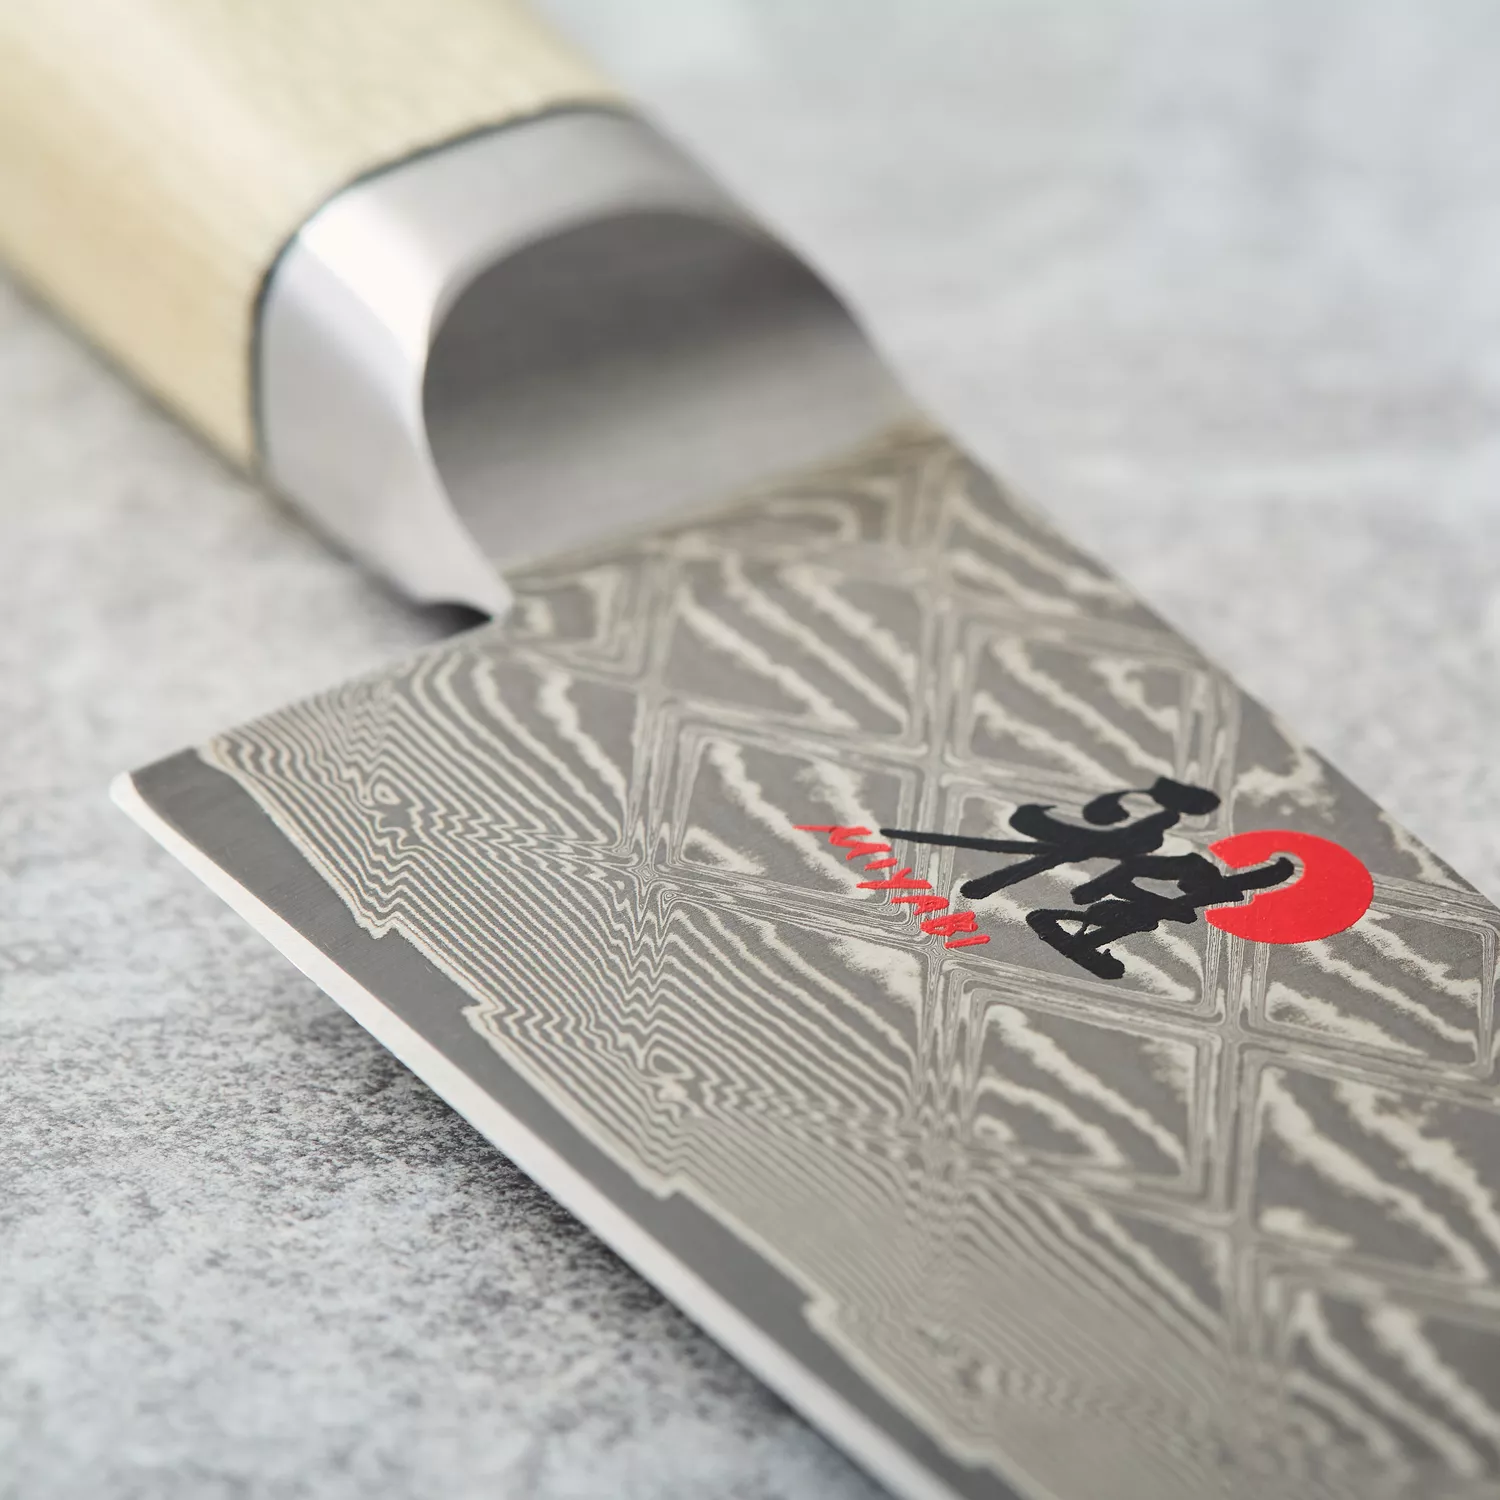 Miyabi Mikoto Paring & Chef’s Knife Set